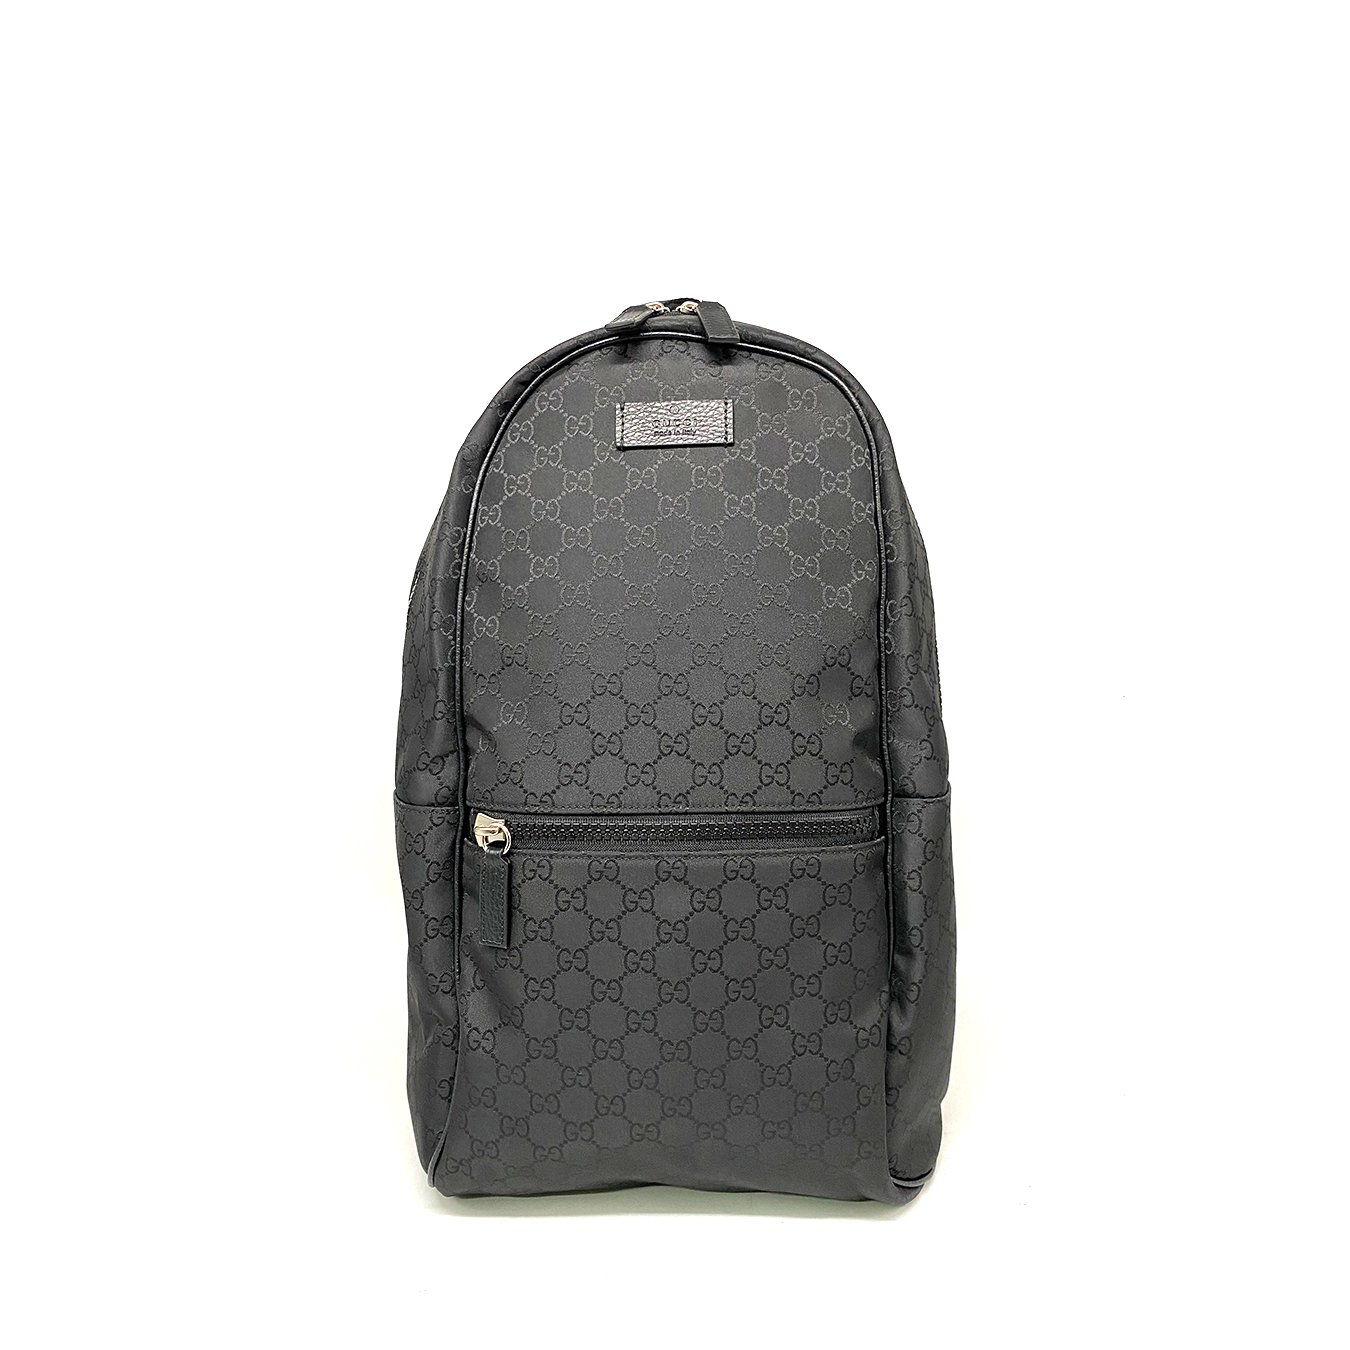 Gucci Backpack GG Nylon Canvas Black